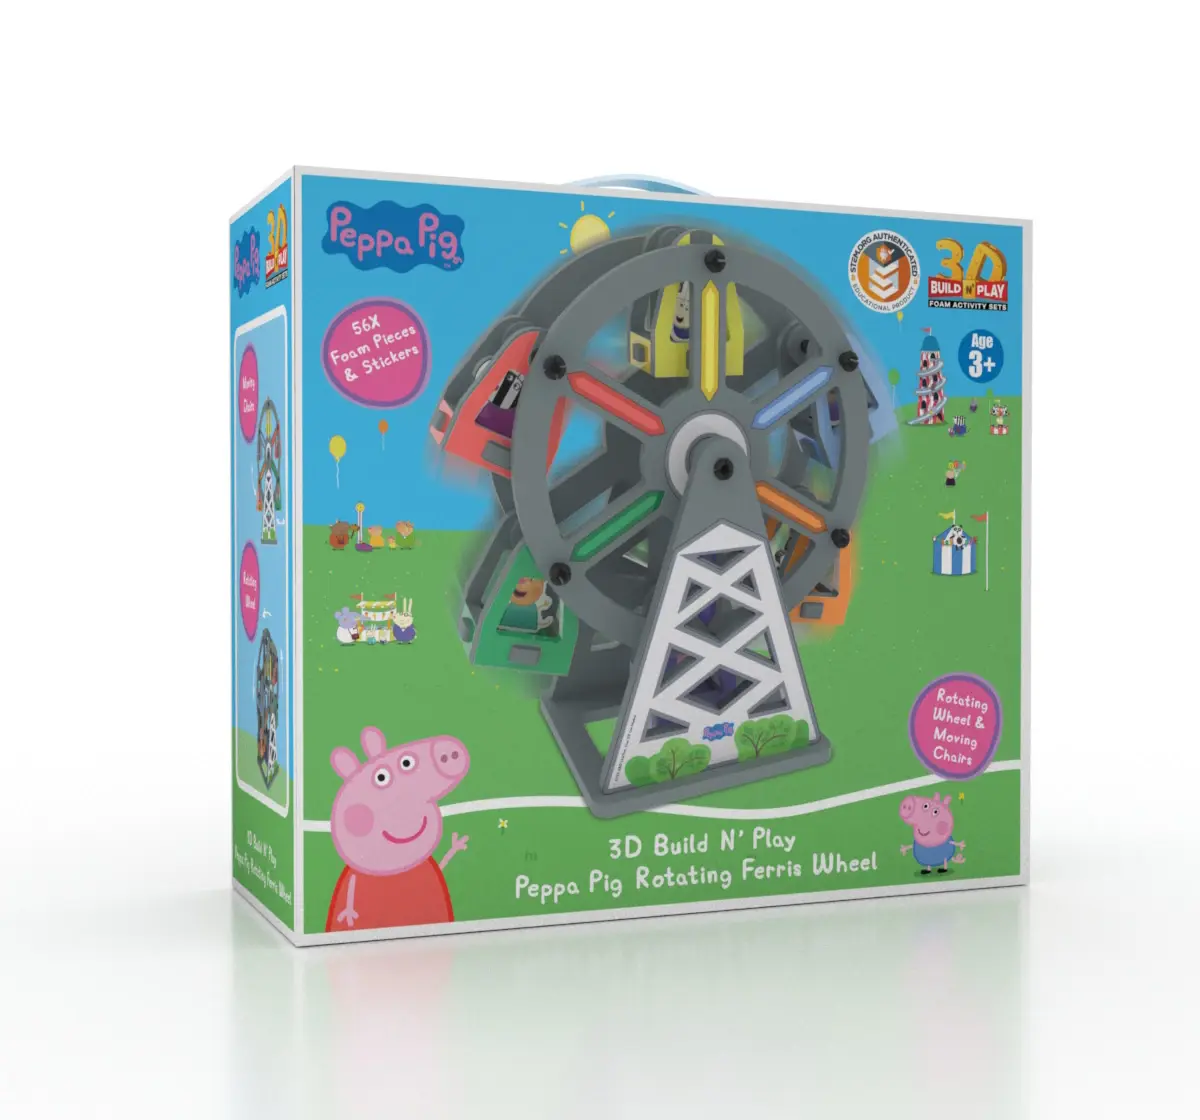 Li'l Wizards 3D Build N' Play Peppa Pig Rotating Ferris Wheel For Kids of Age 3Y+, Multicolour